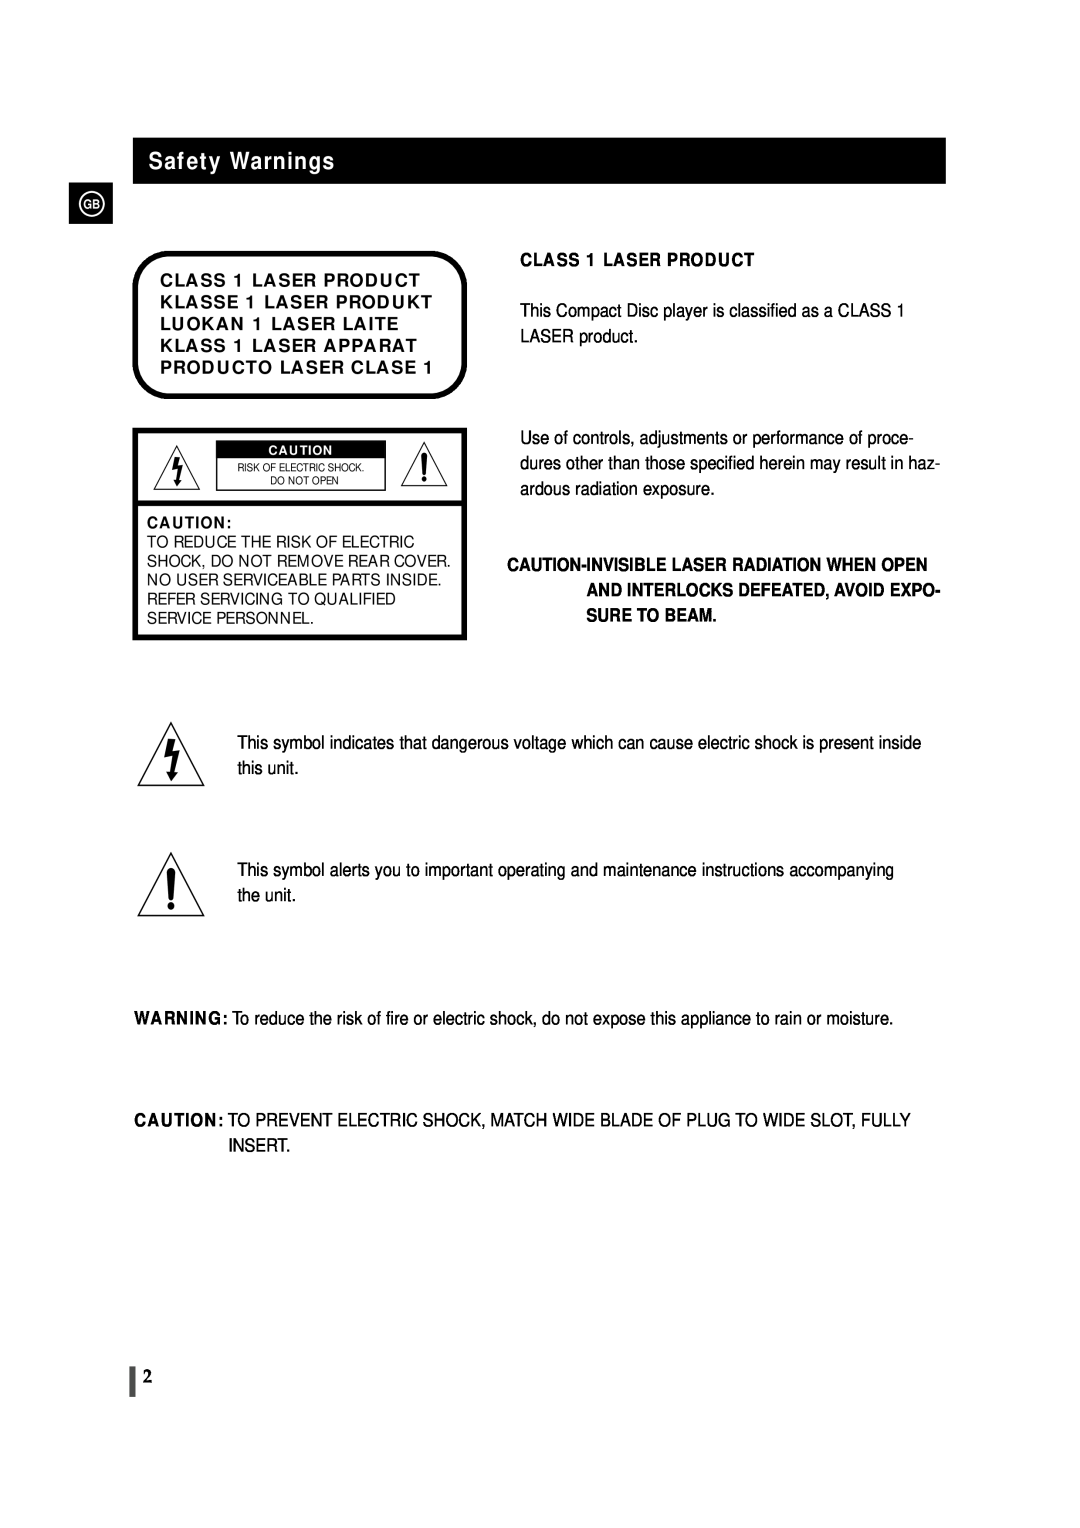 Samsung MAX-VS720 instruction manual Safety Warnings, CLASS 1 LASER PRODUCT KLASSE 1 LASER PRODUKT, Producto Laser Clase 